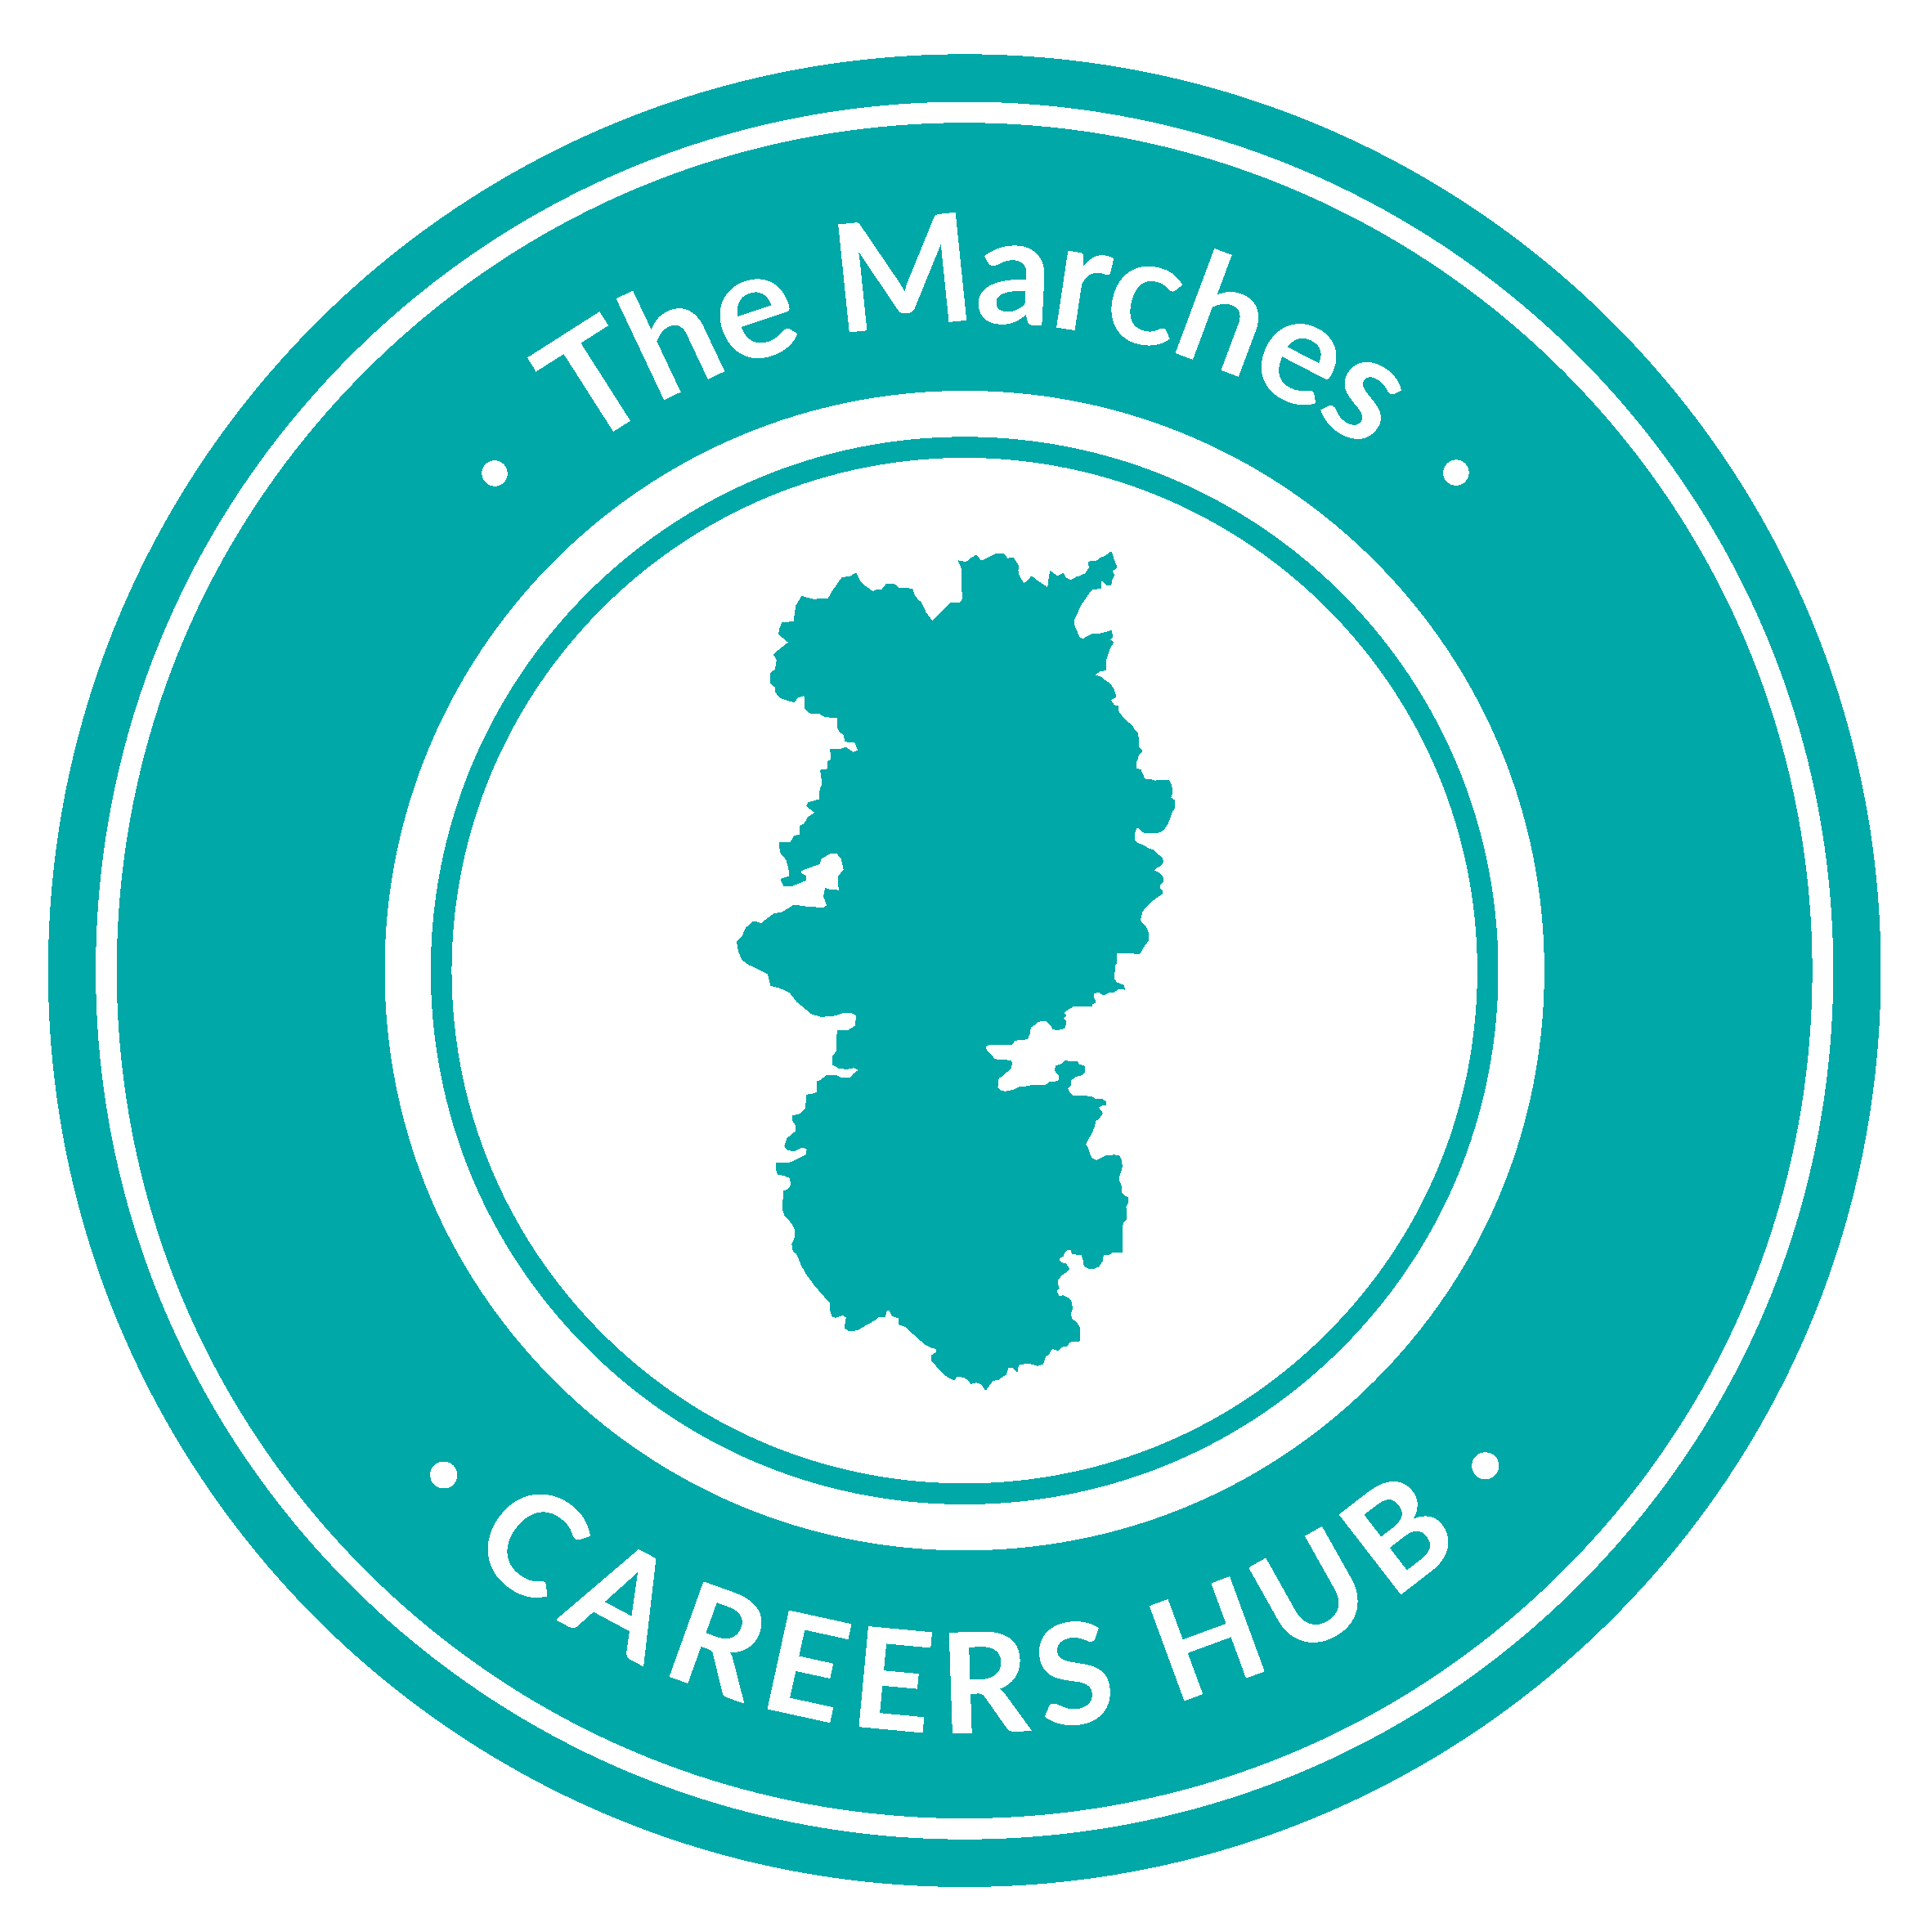 Careers Hub logo